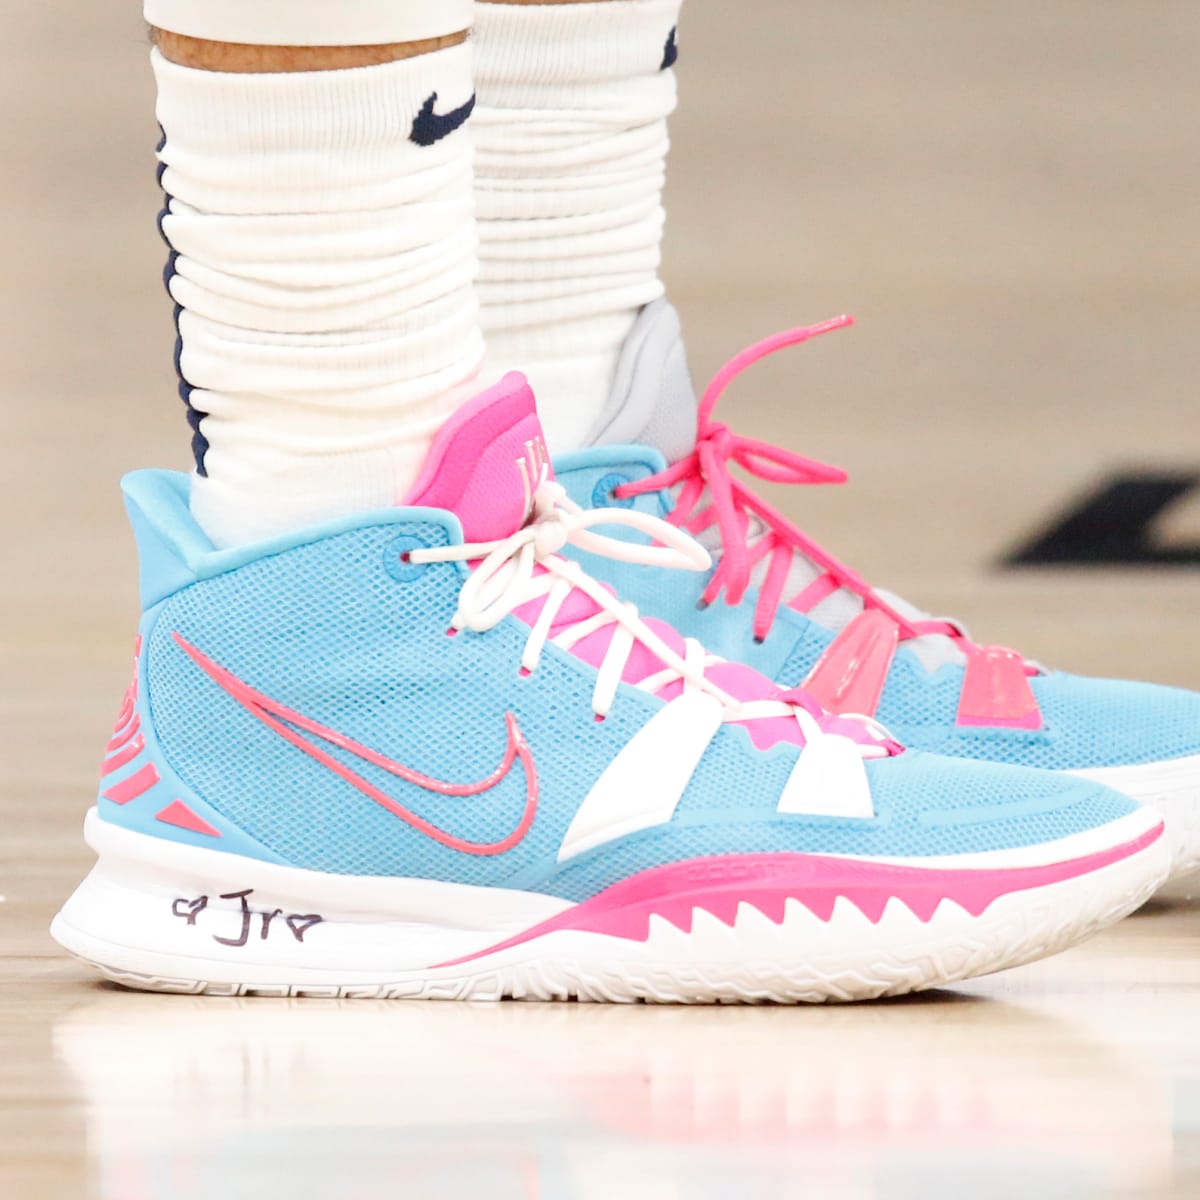 Kicks On Court: Weekly Rundown of the Best Sneakers Worn in the NBA